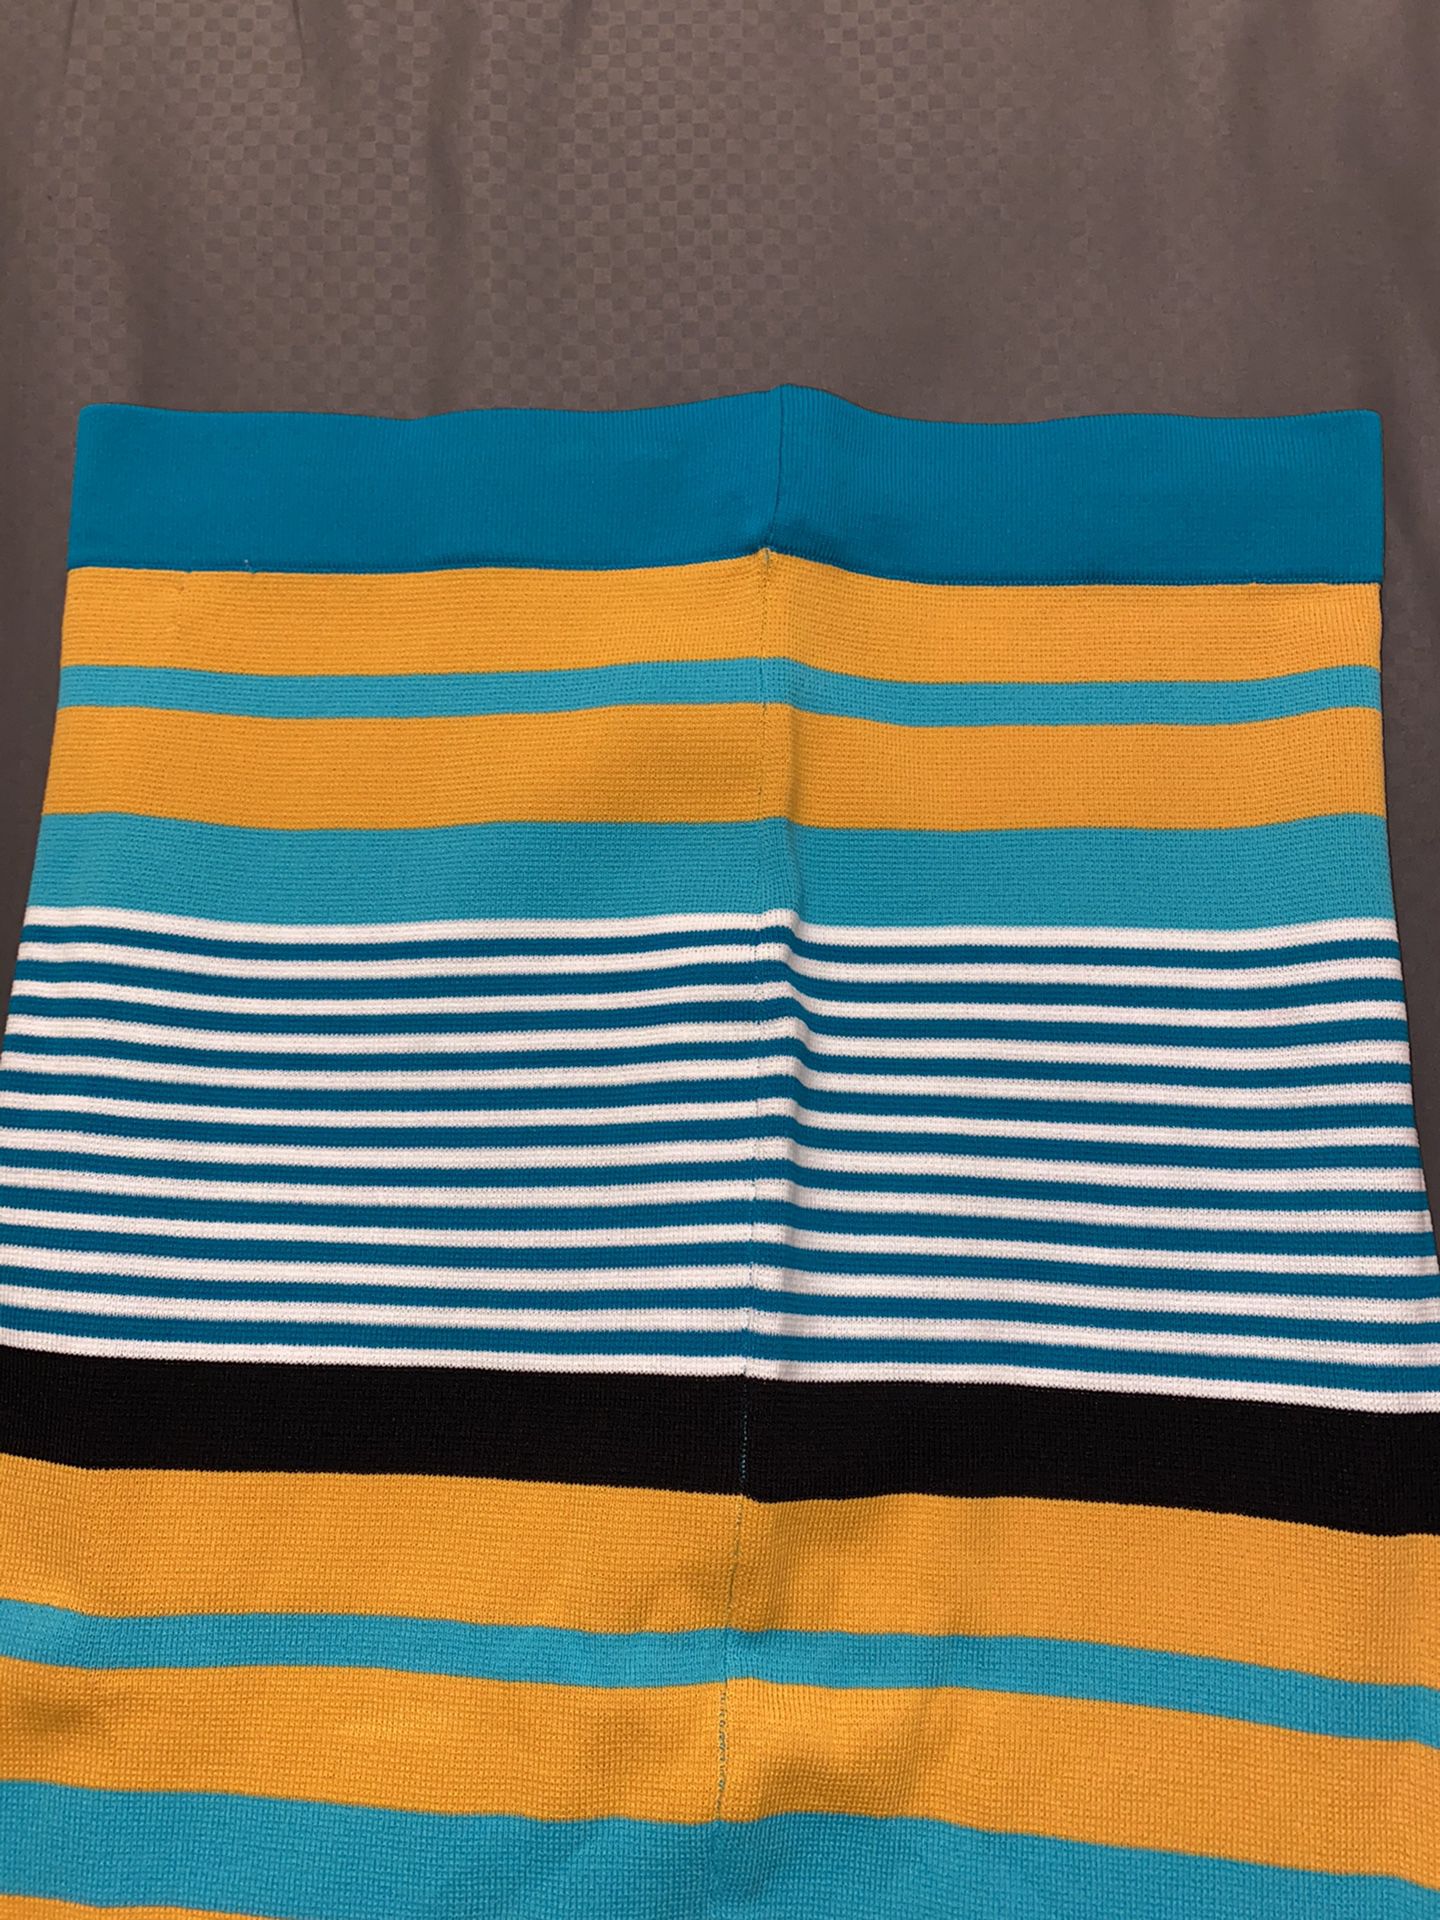 New York & Company striped skirt